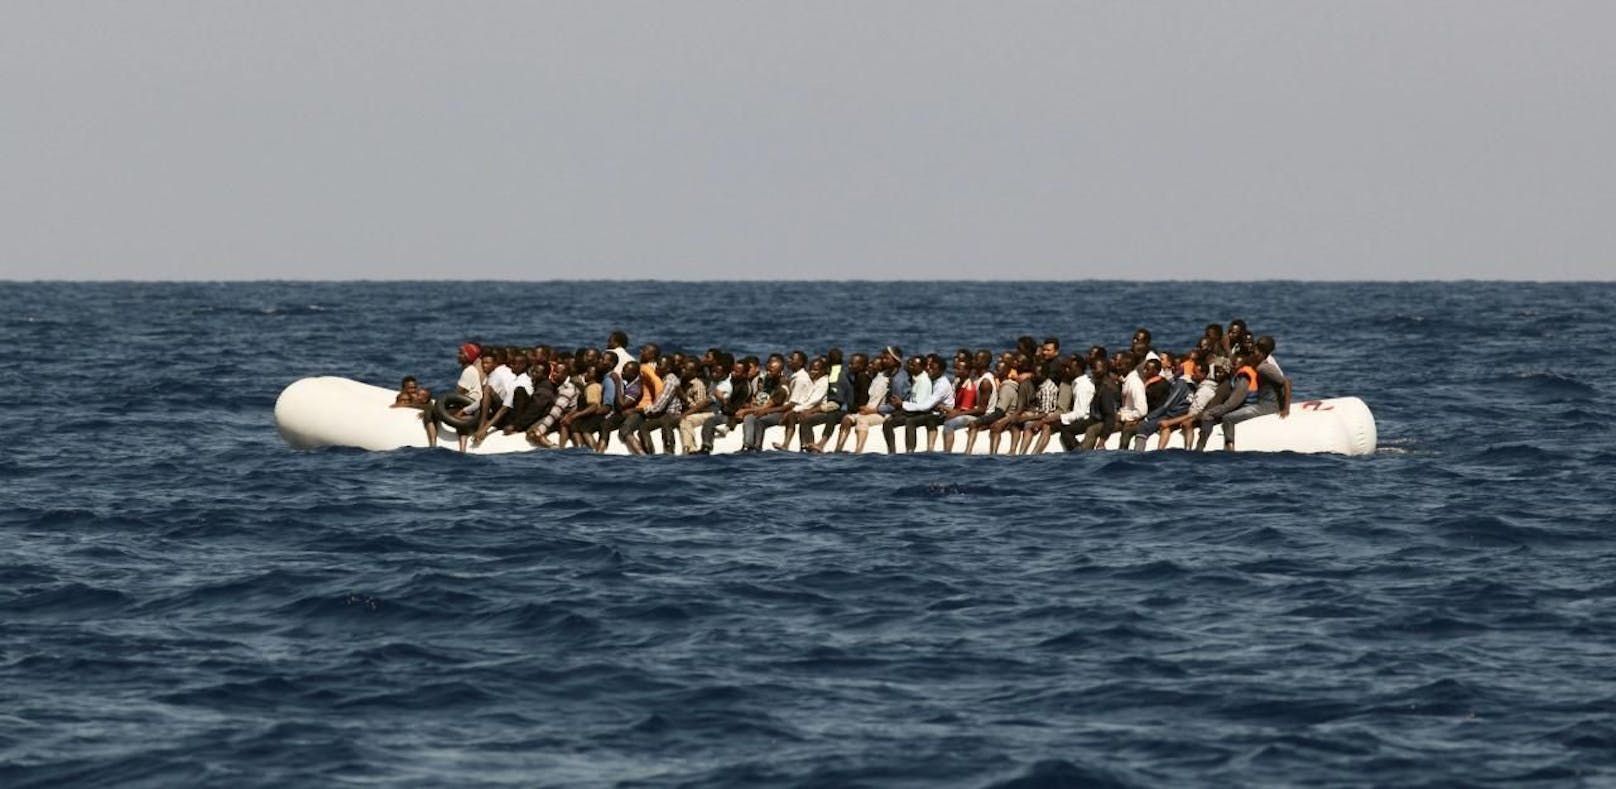 Ein Boot mit mehr als hundert Flüchtlingen an Bord ist gekentert.